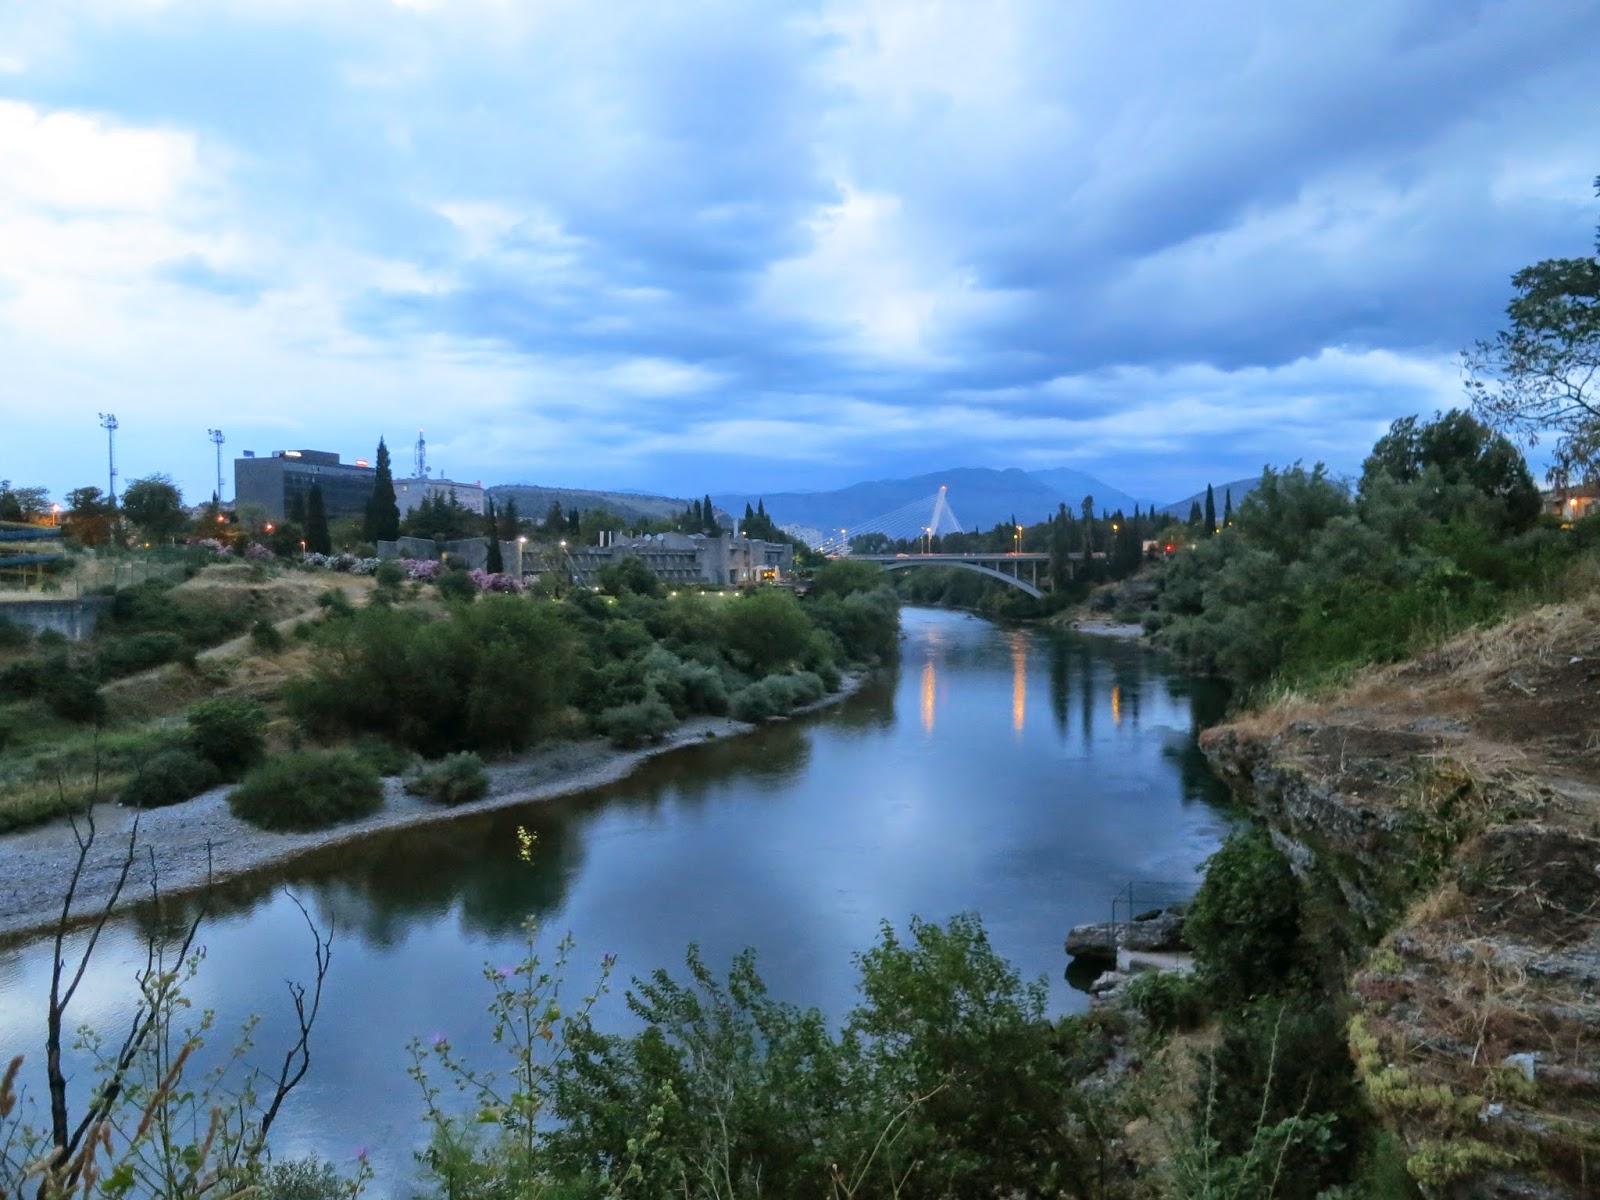 Distant view of the Millennium Bridge spanning the Moraca River in Podgorica, Montenegro